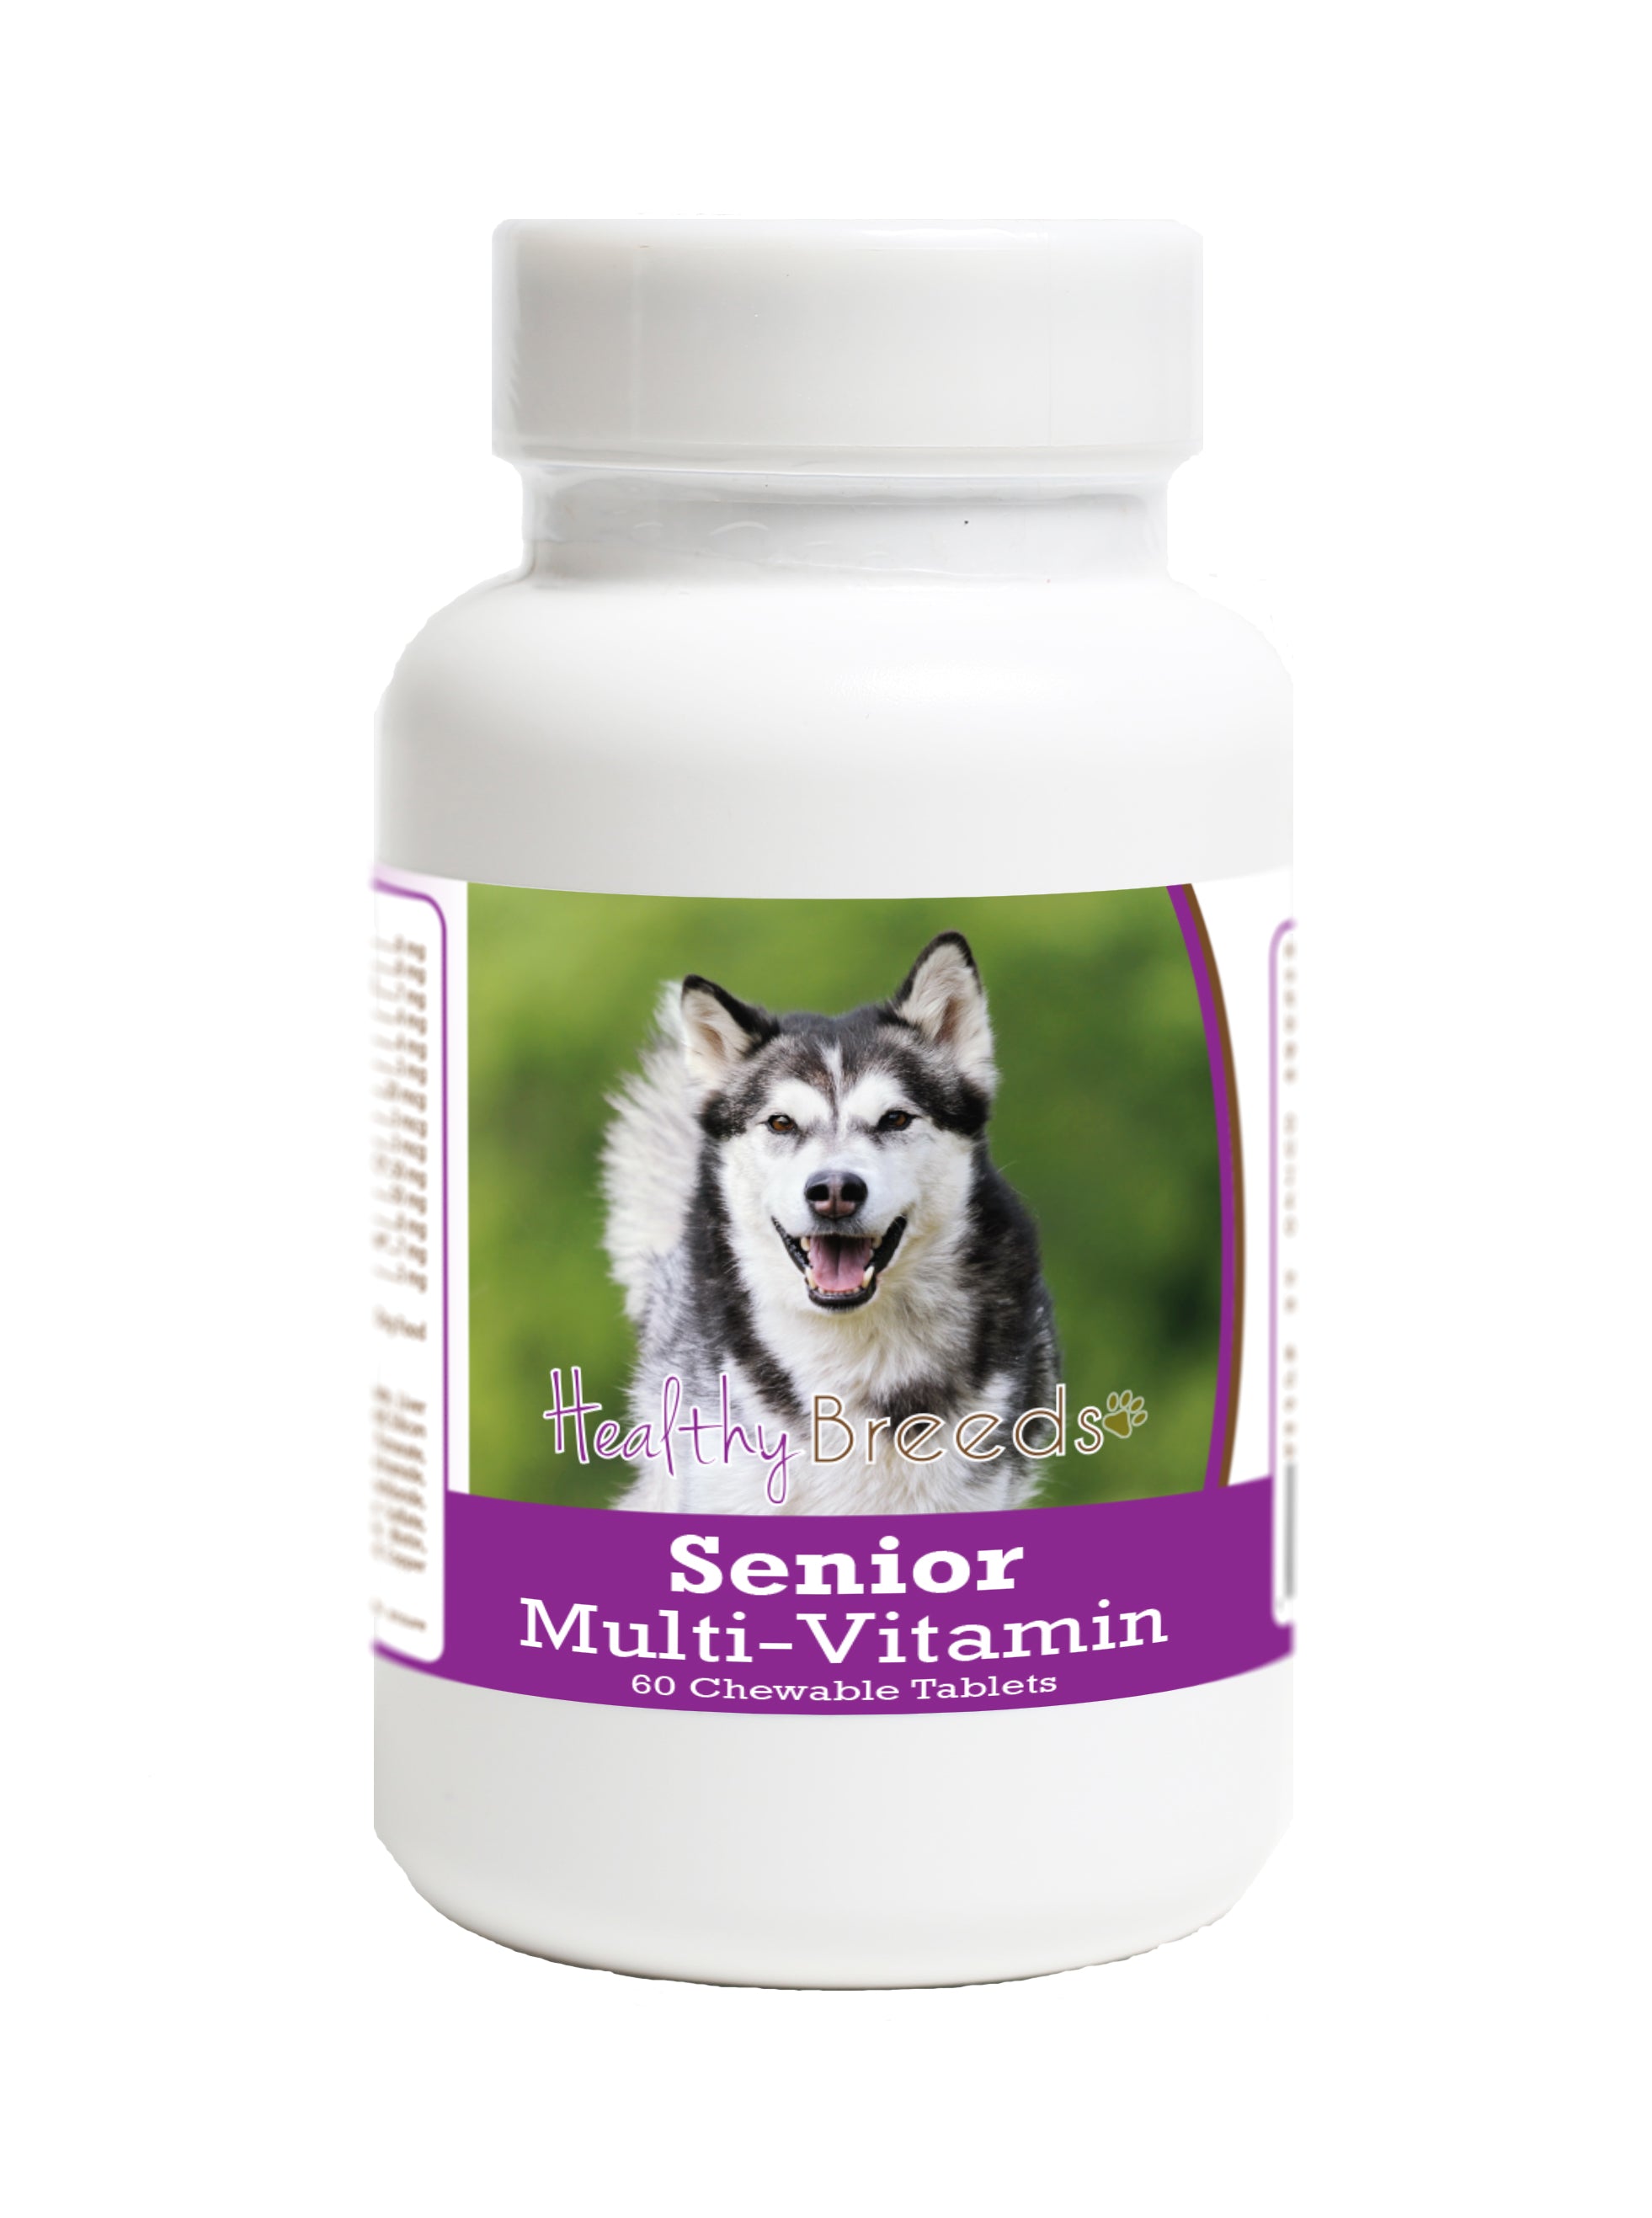 Alaskan Malamute Senior Dog Multivitamin Tablets 60 Count